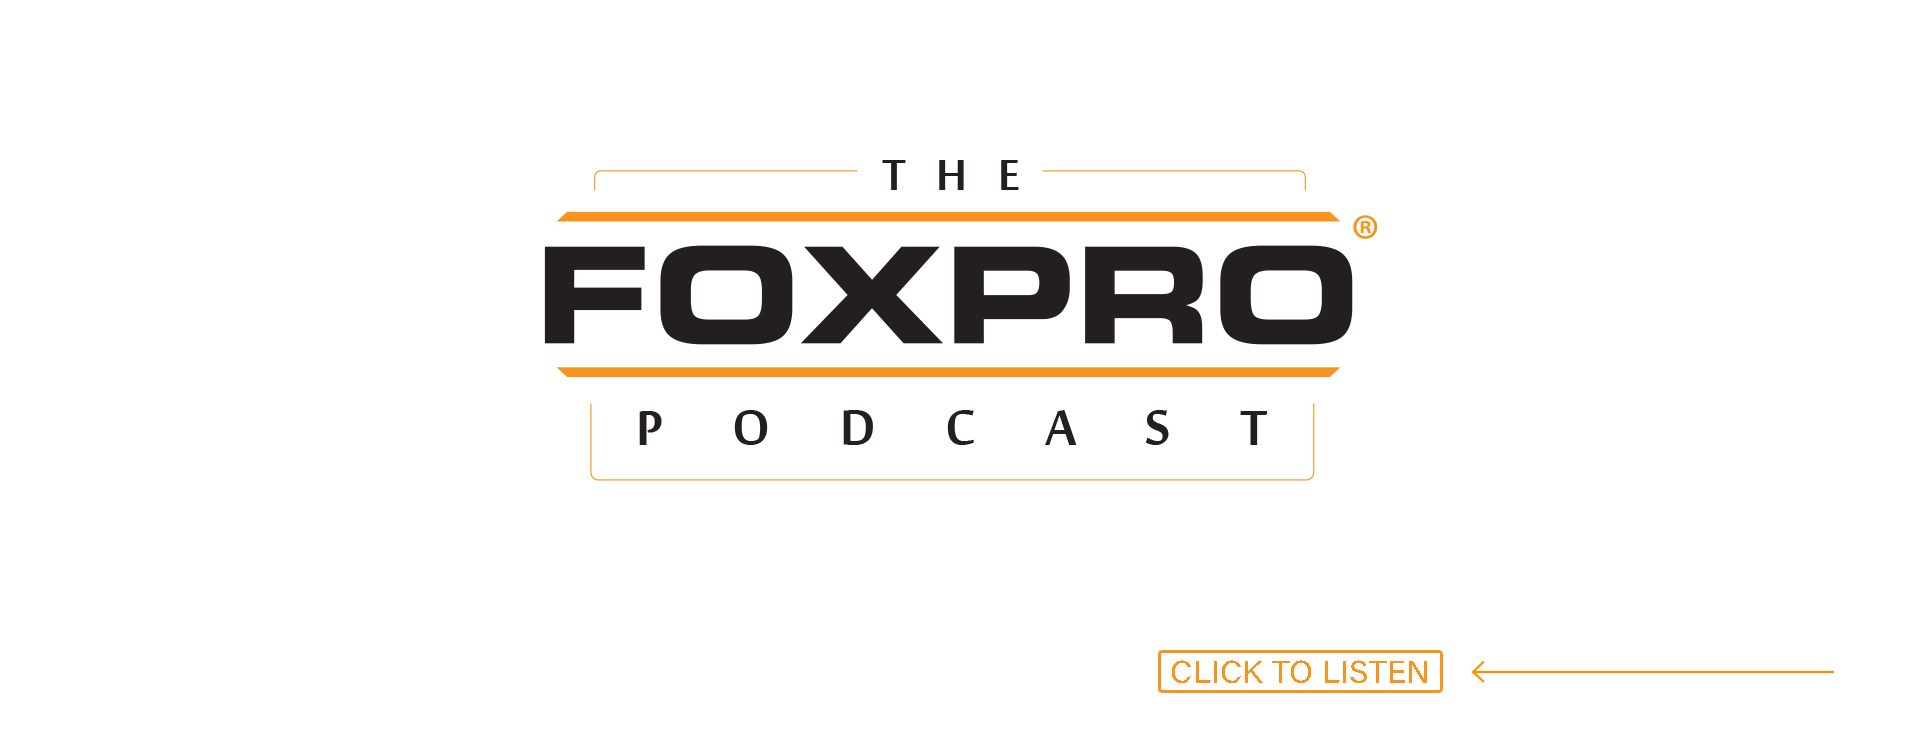 FOXPRO Podcast logo.